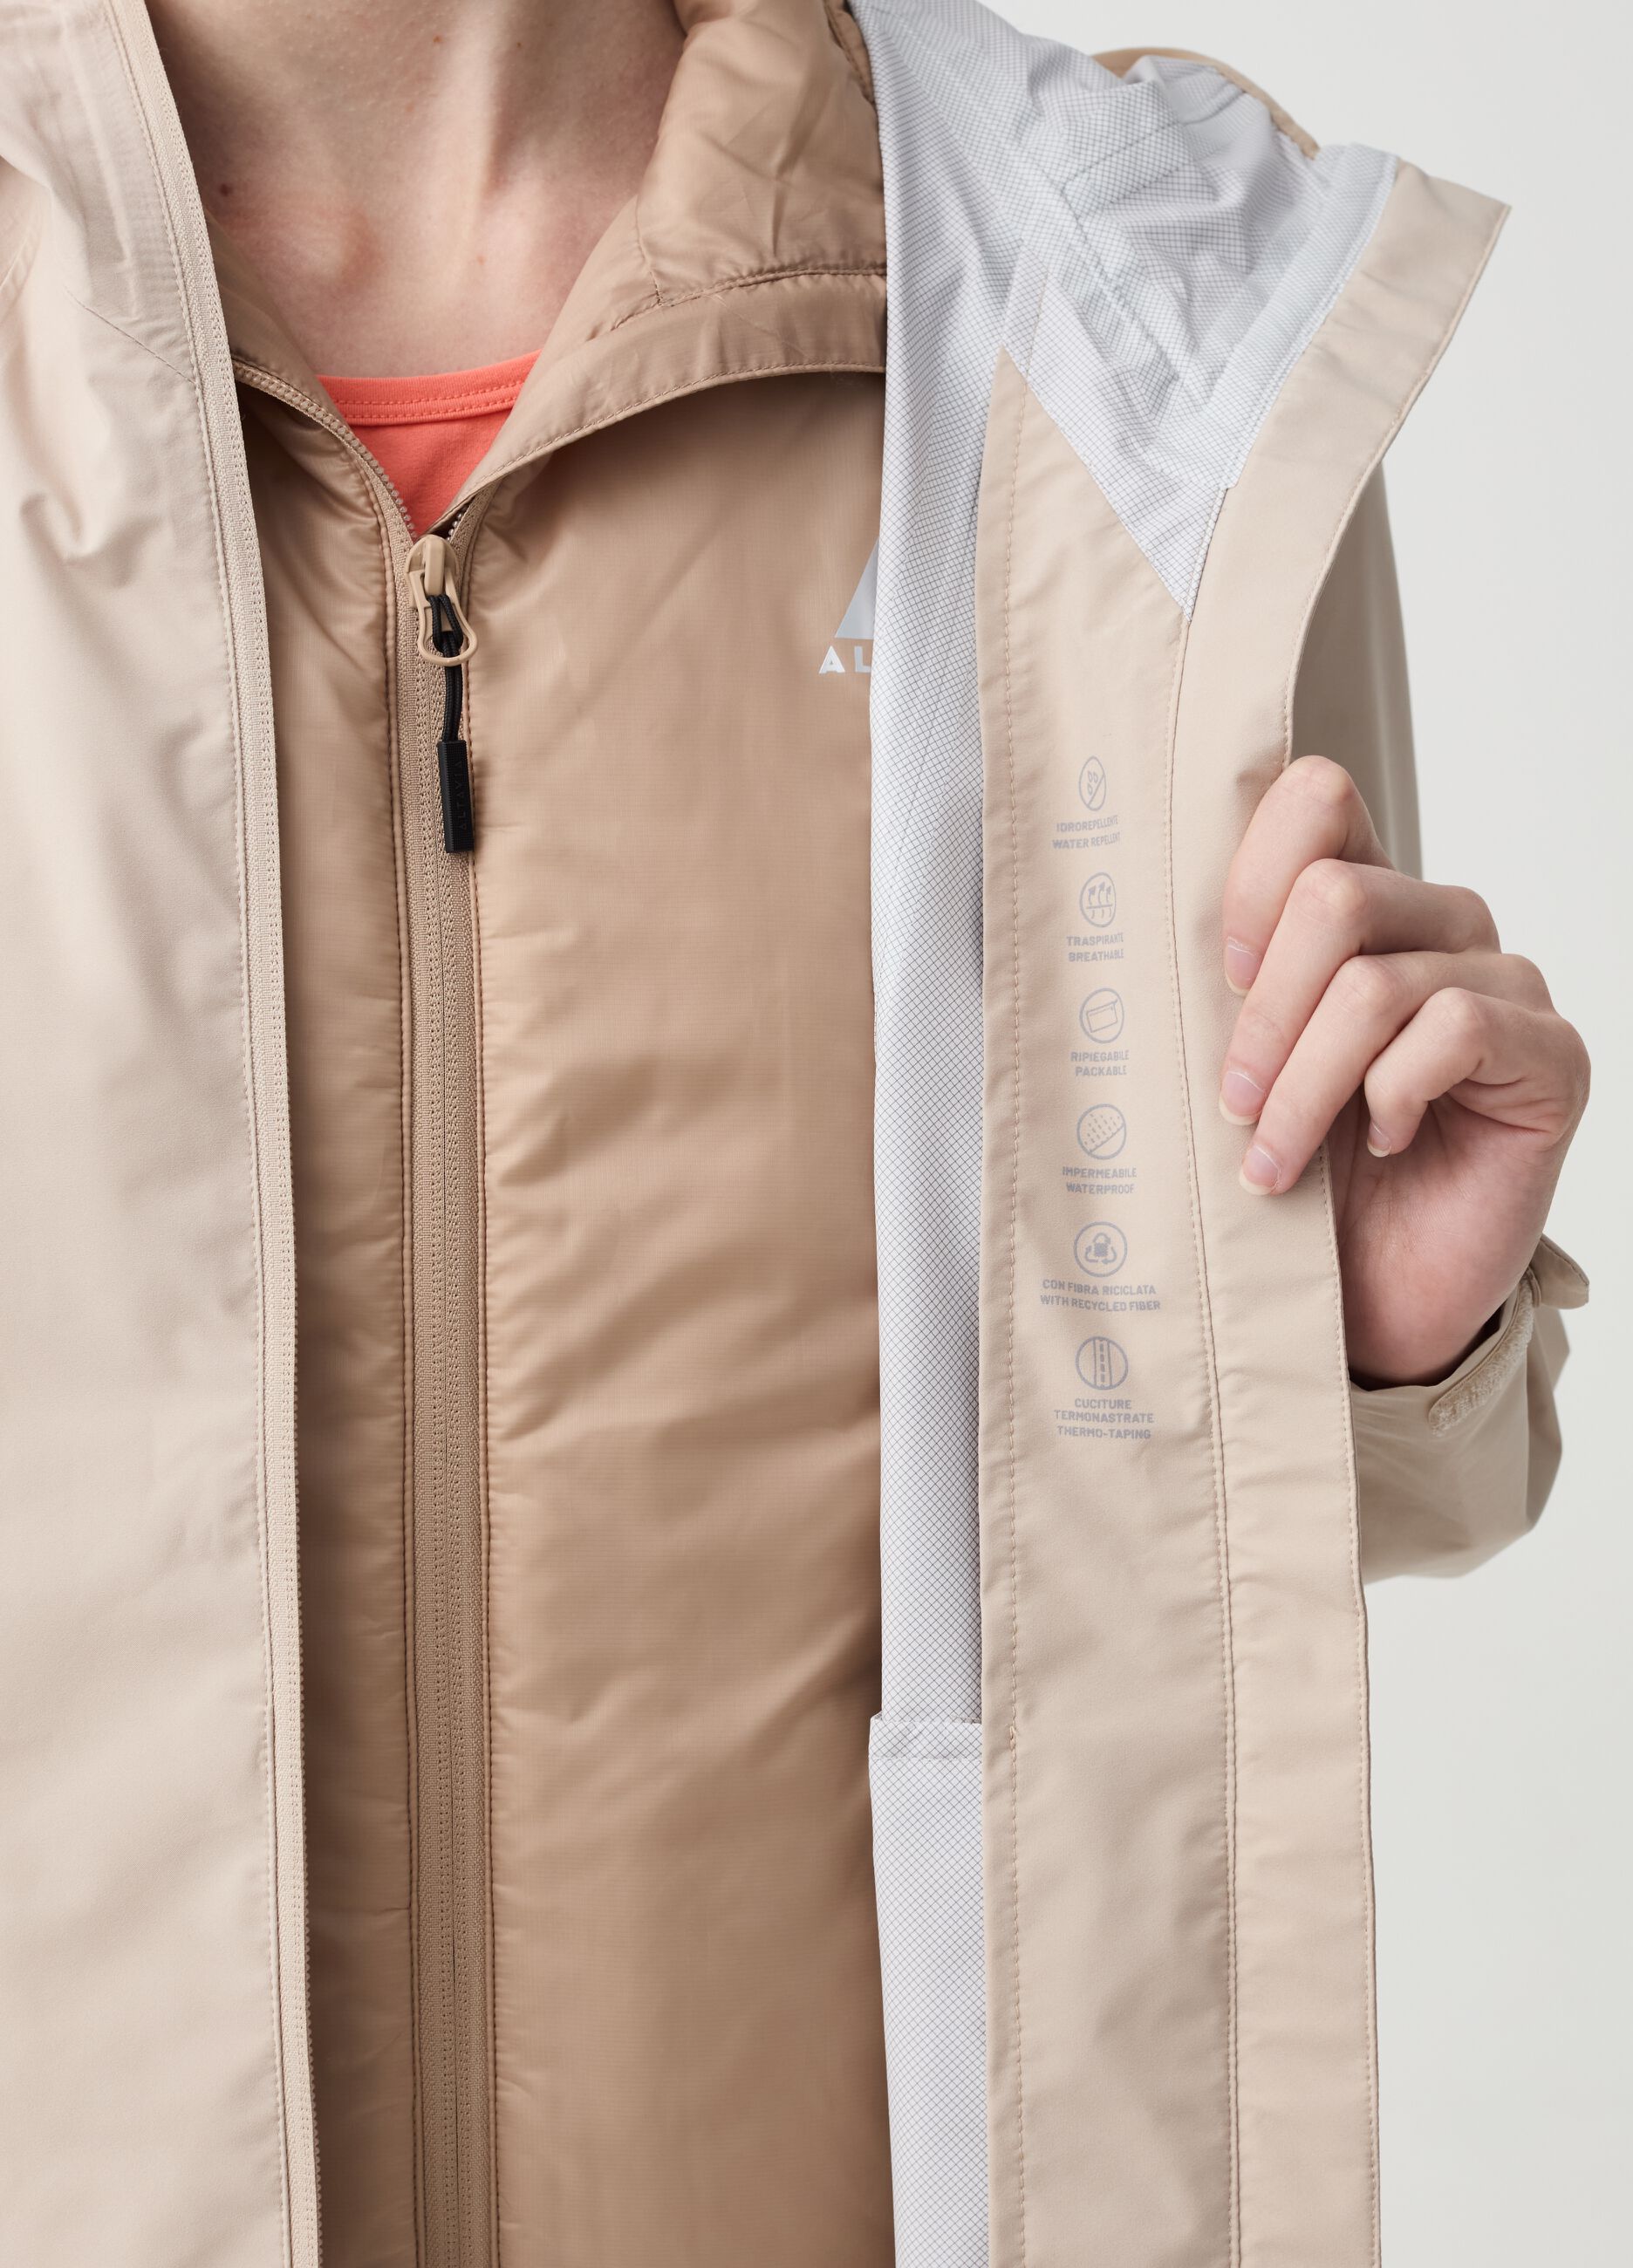 Altavia waterproof jacket with hood